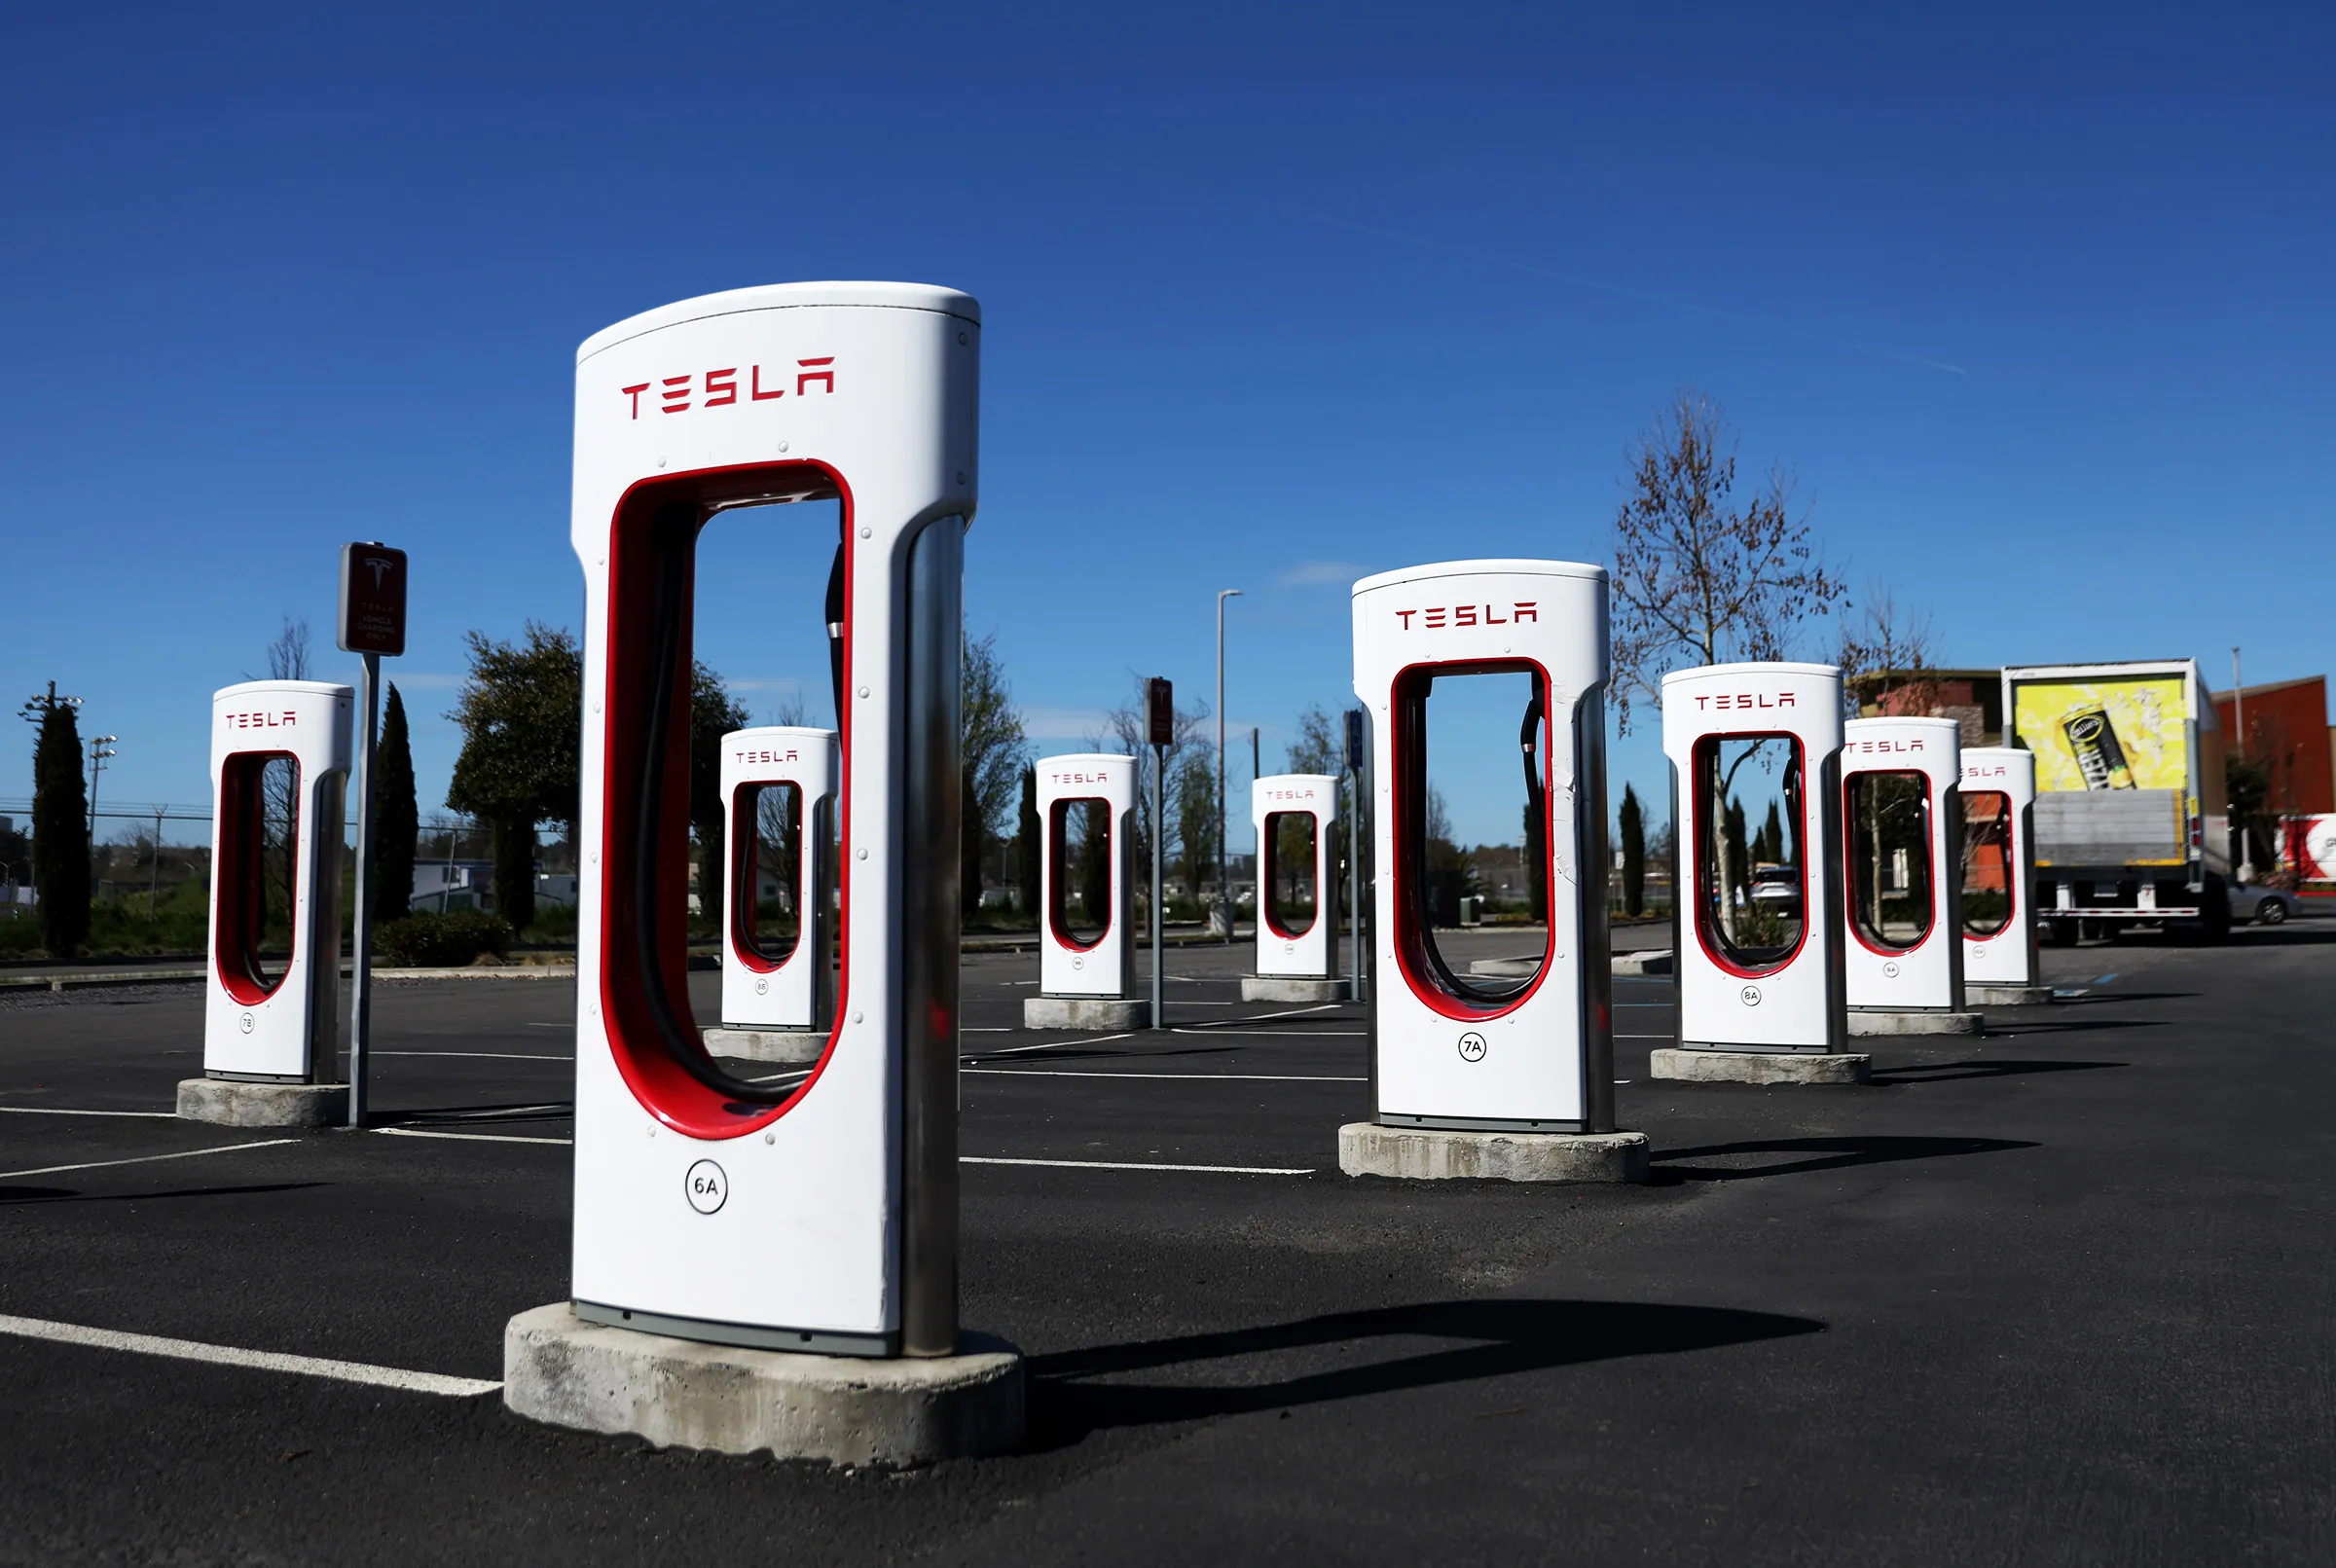 Tesla to Continue Supercharging Network Expansion Despite Team Changes